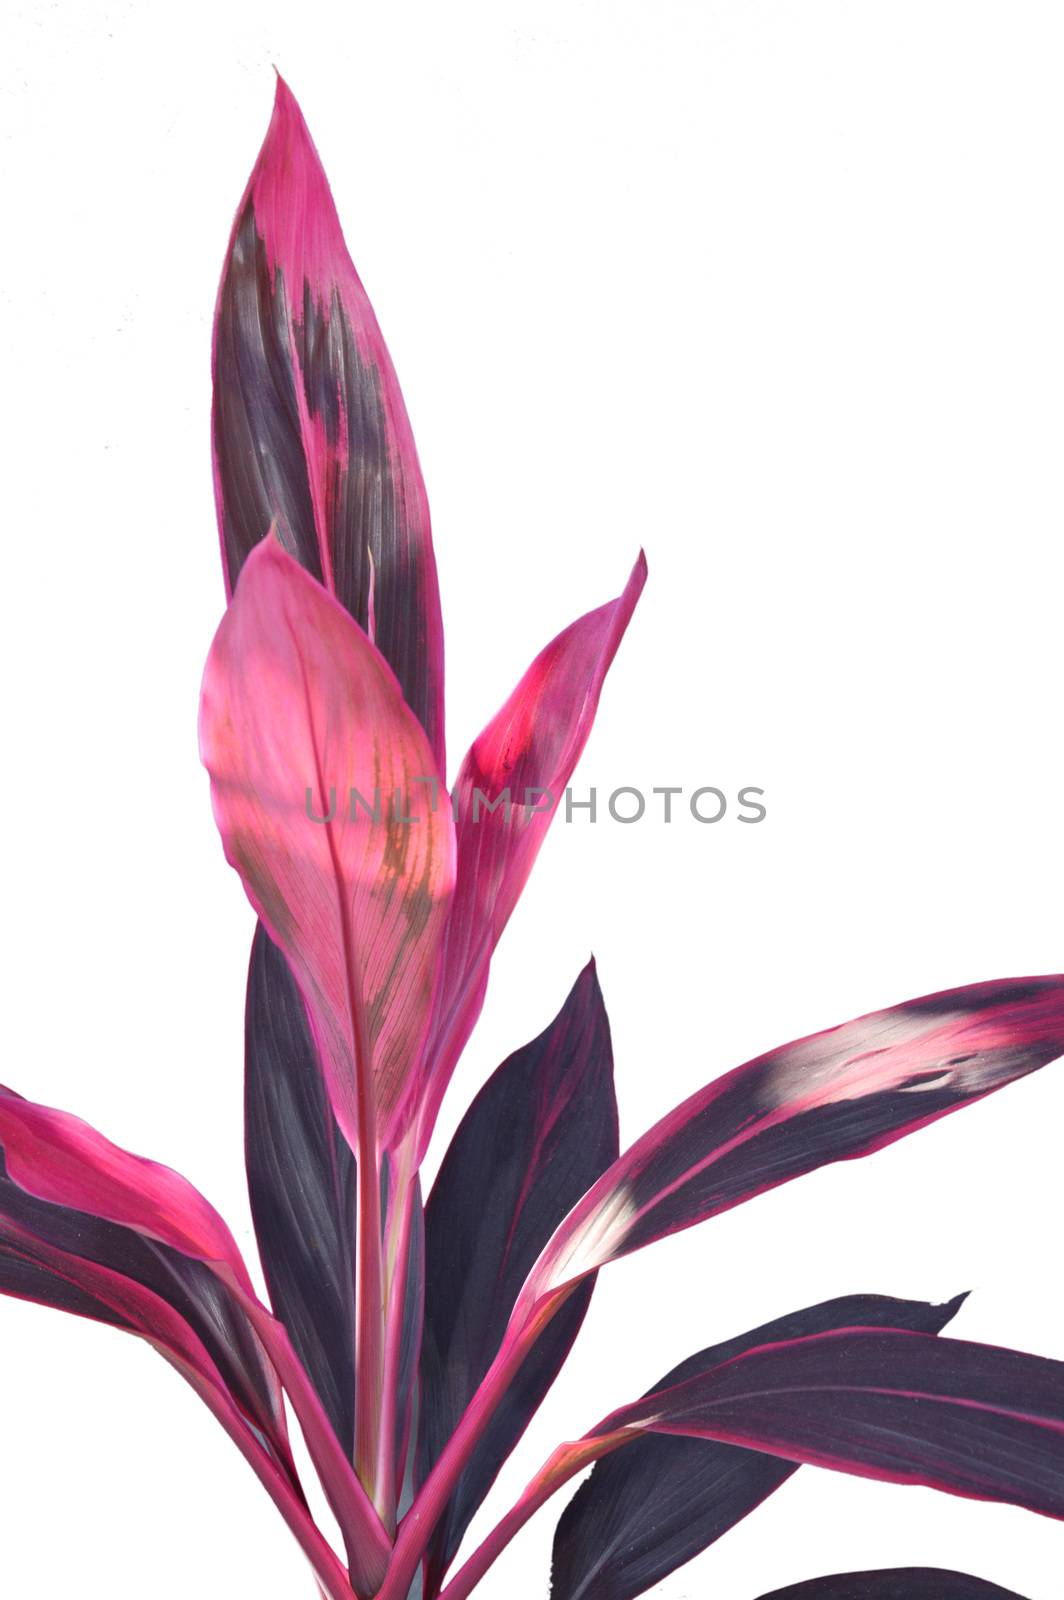 Corn Plant's bright leaf with red stripe (Dracaena fragrans) by antonihalim